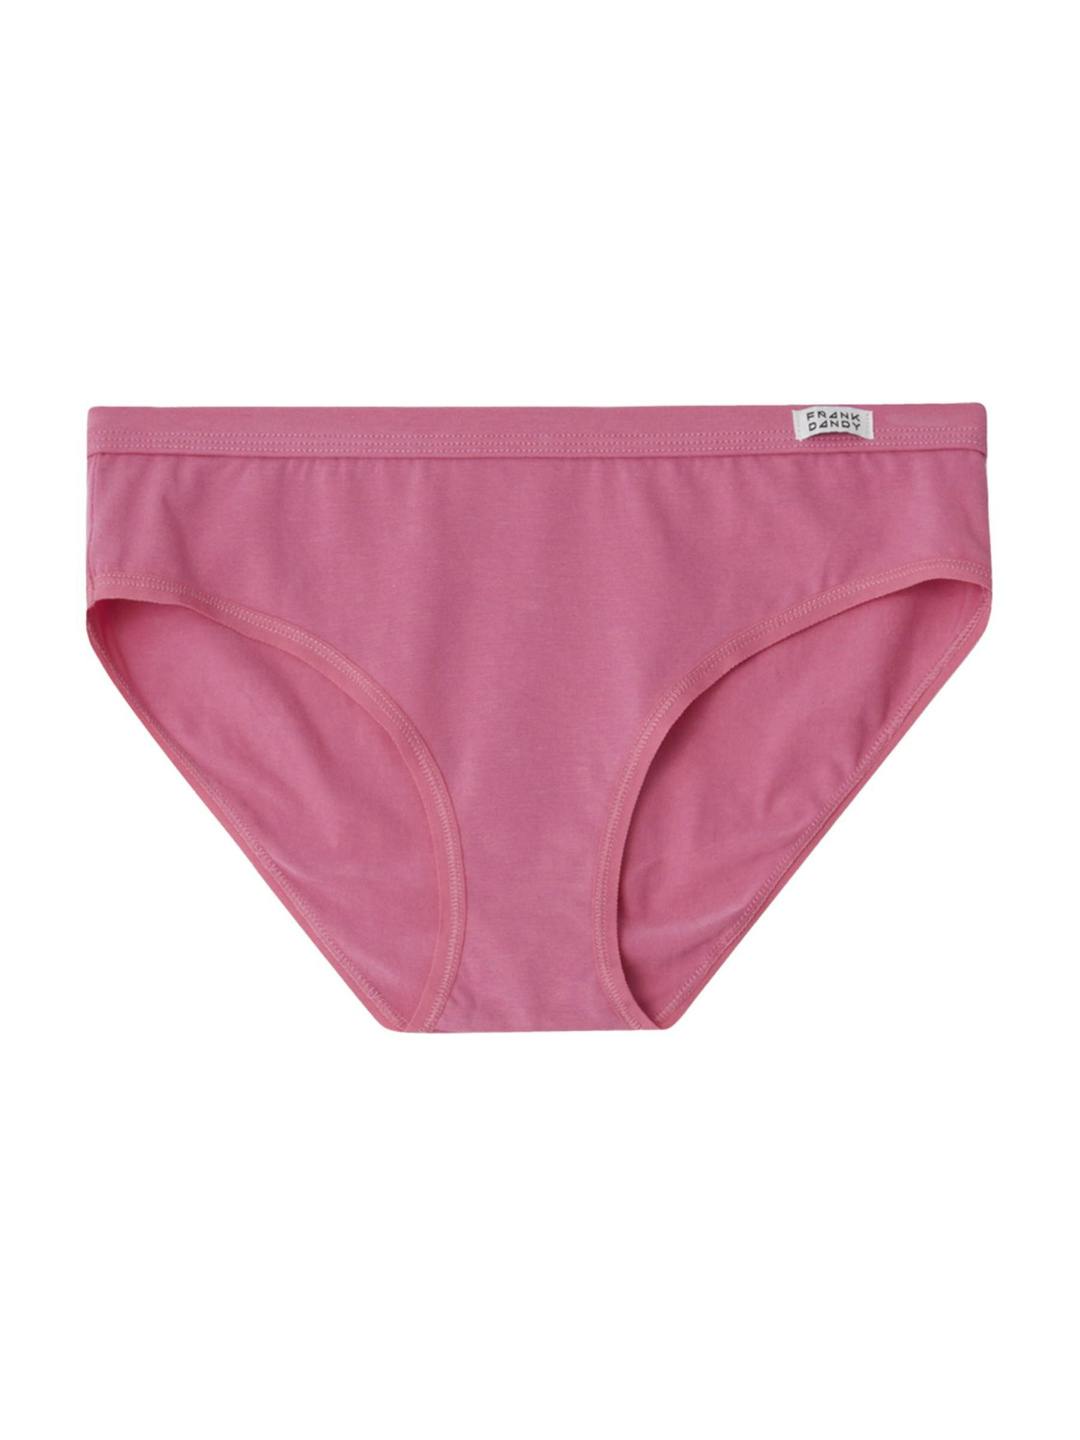 JHKKU Women's Bamboo Fiber Pink Peaches Underwear Classic Briefs